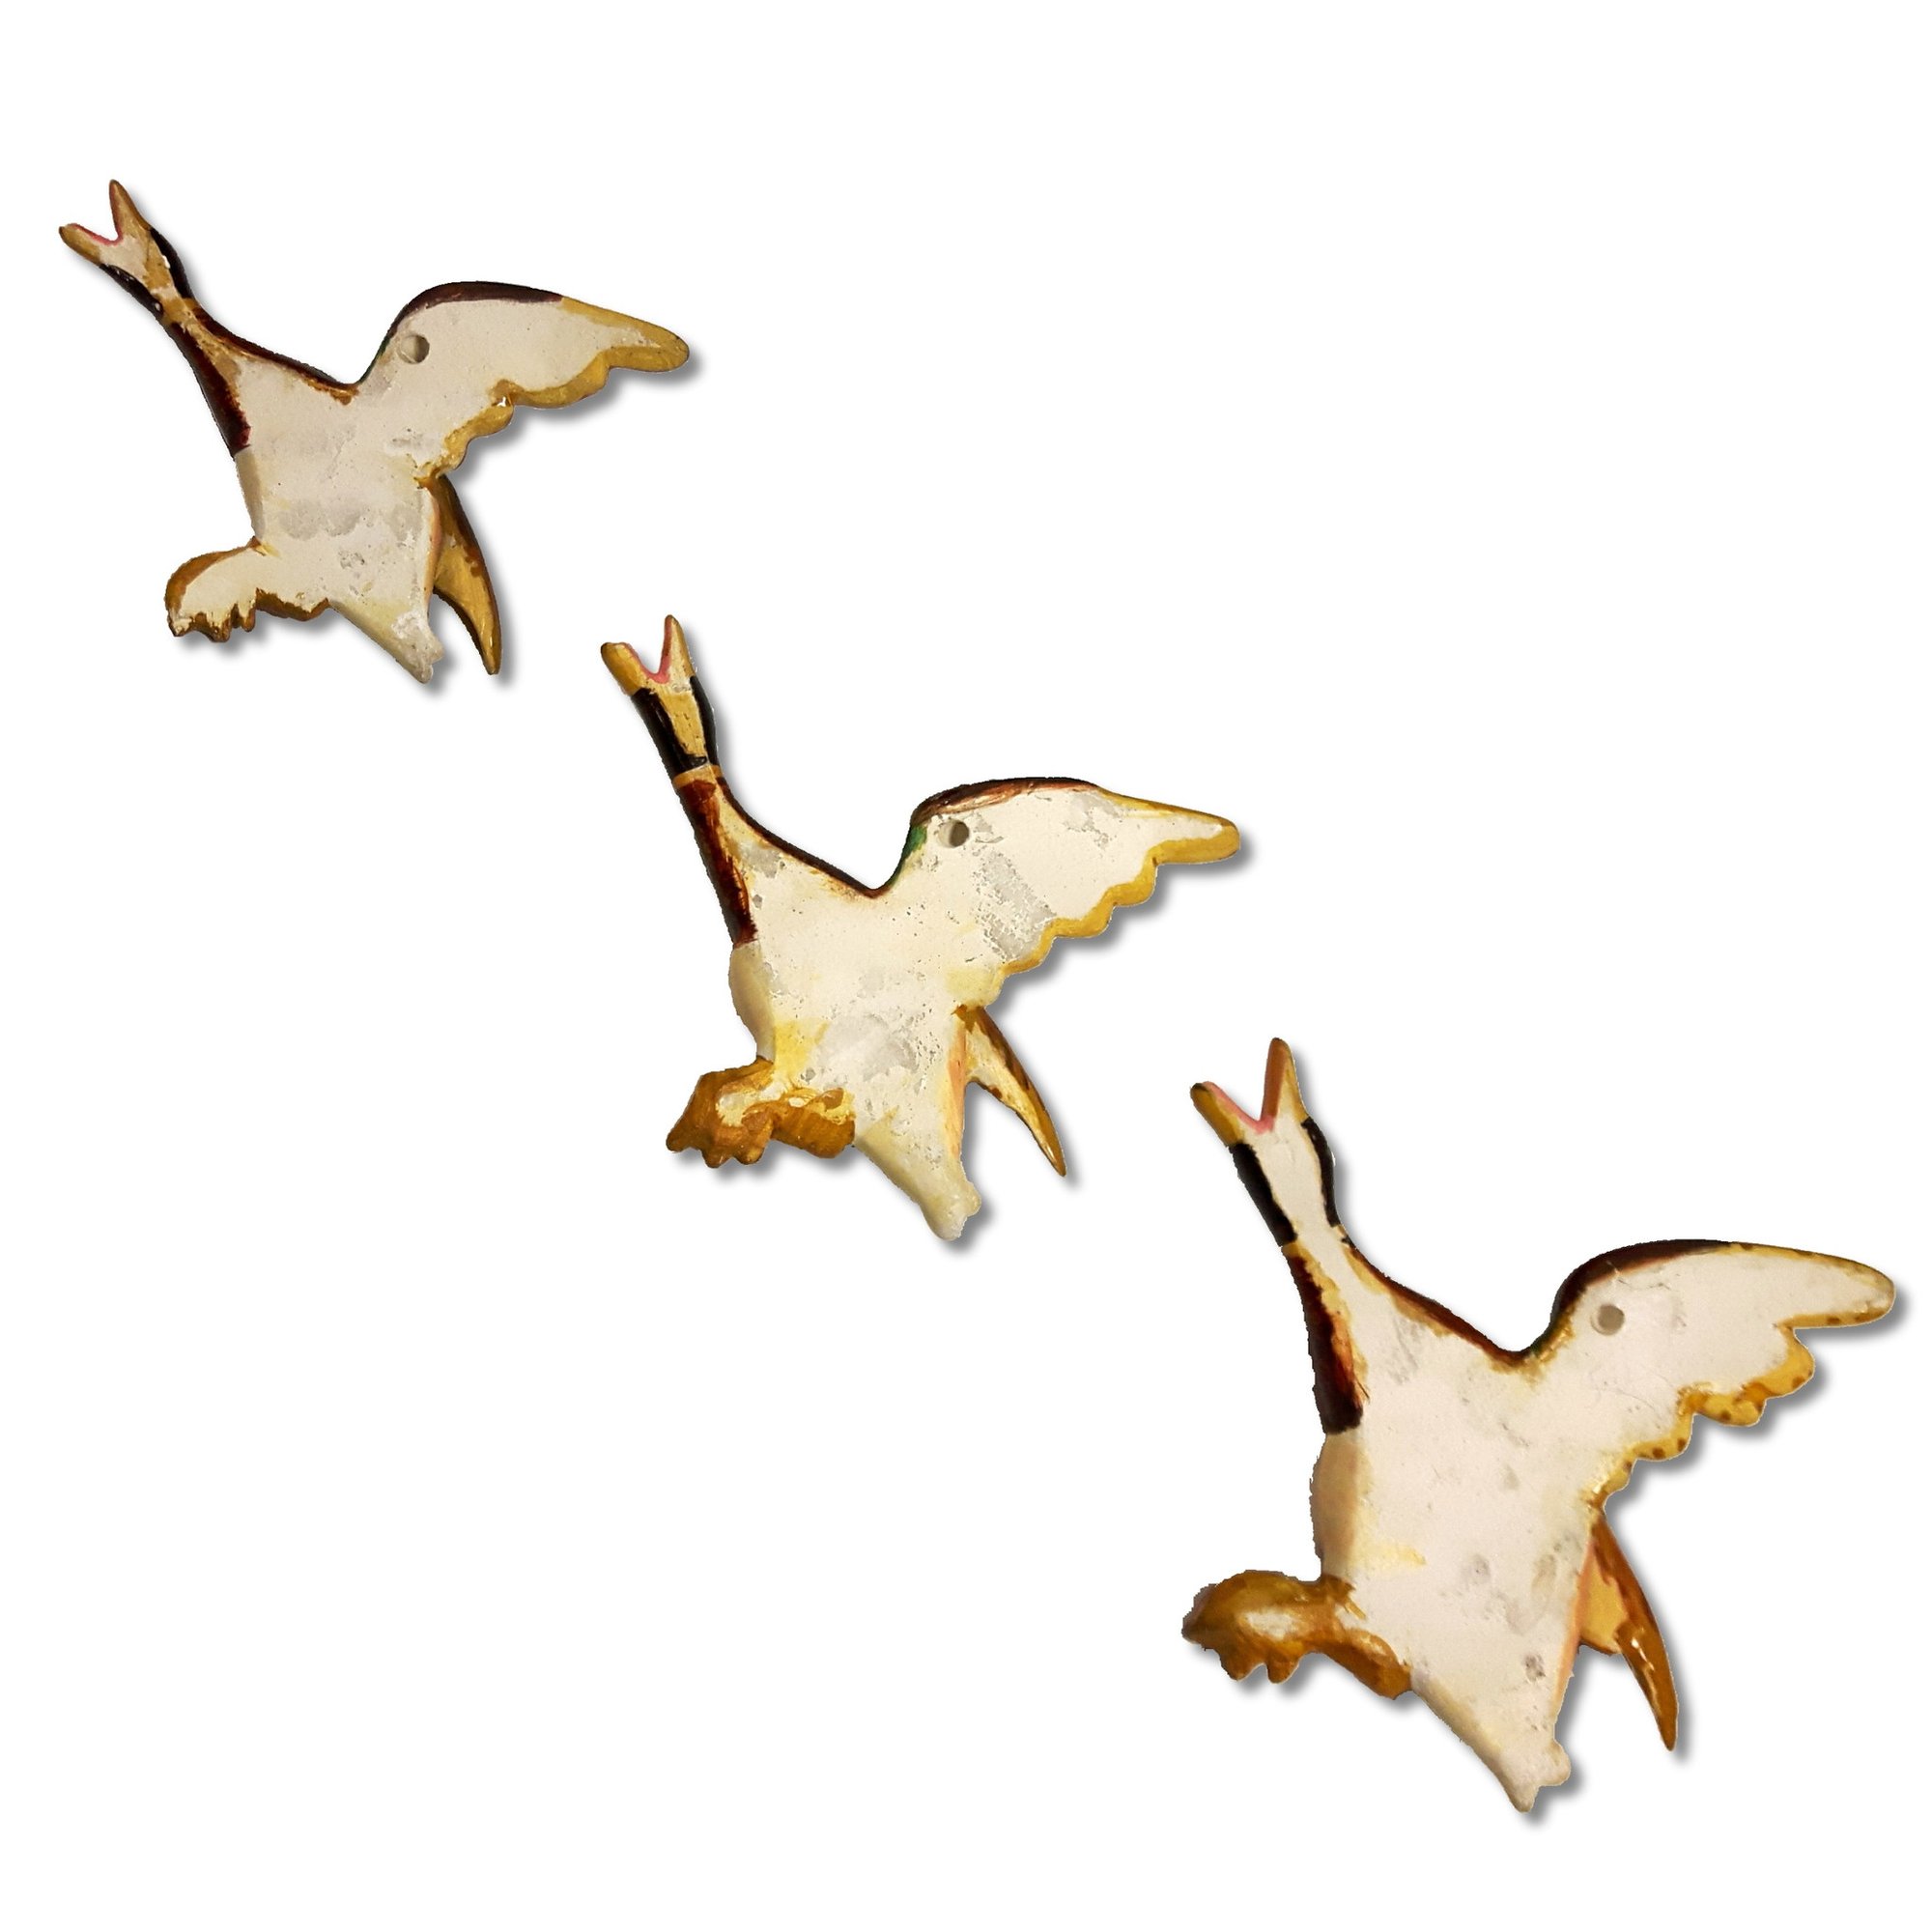 Flying ducks photo